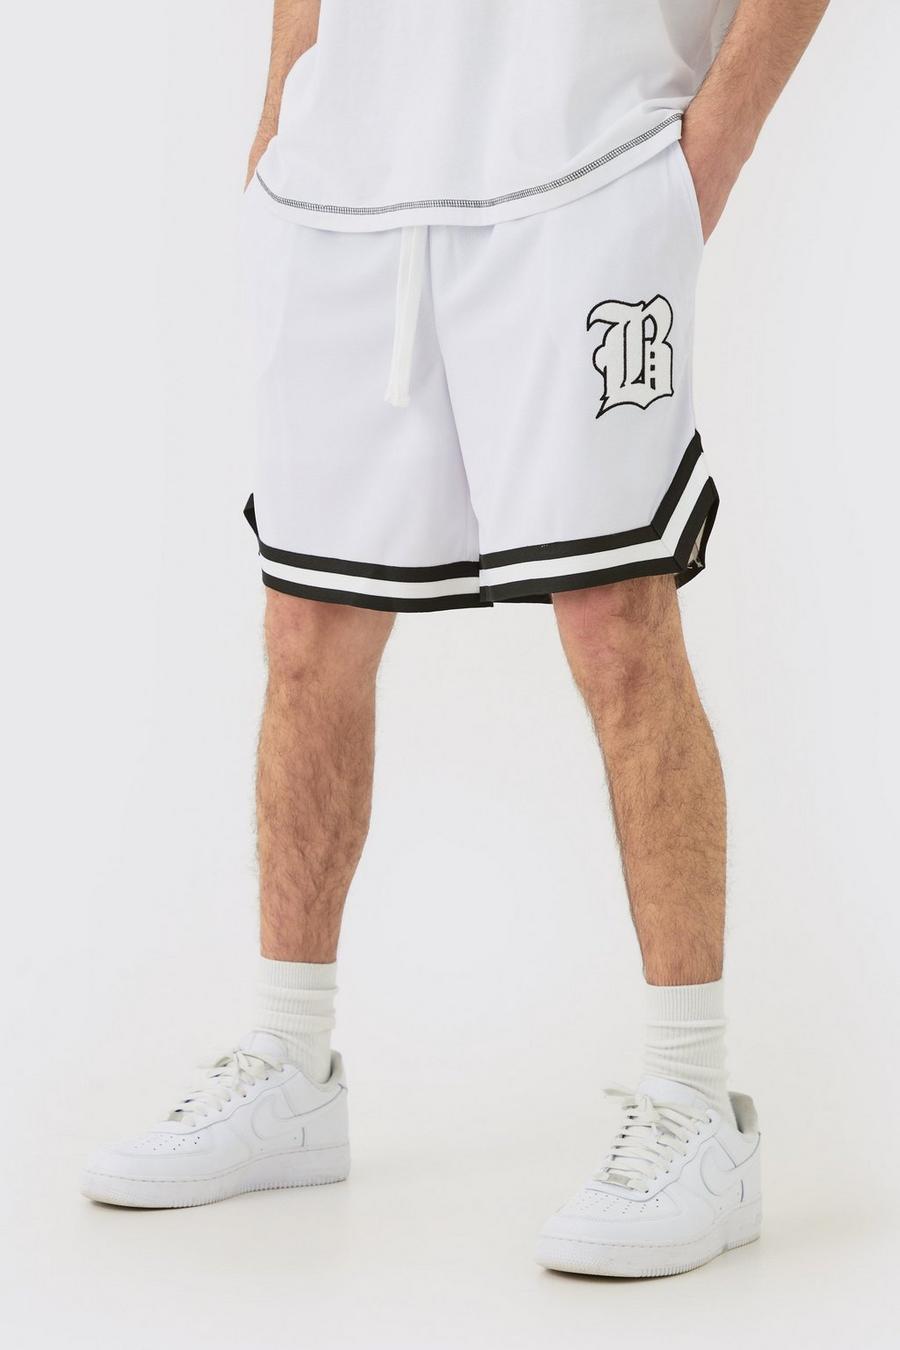 Lockere Mesh Basketball-Shorts mit B-Applikation, White